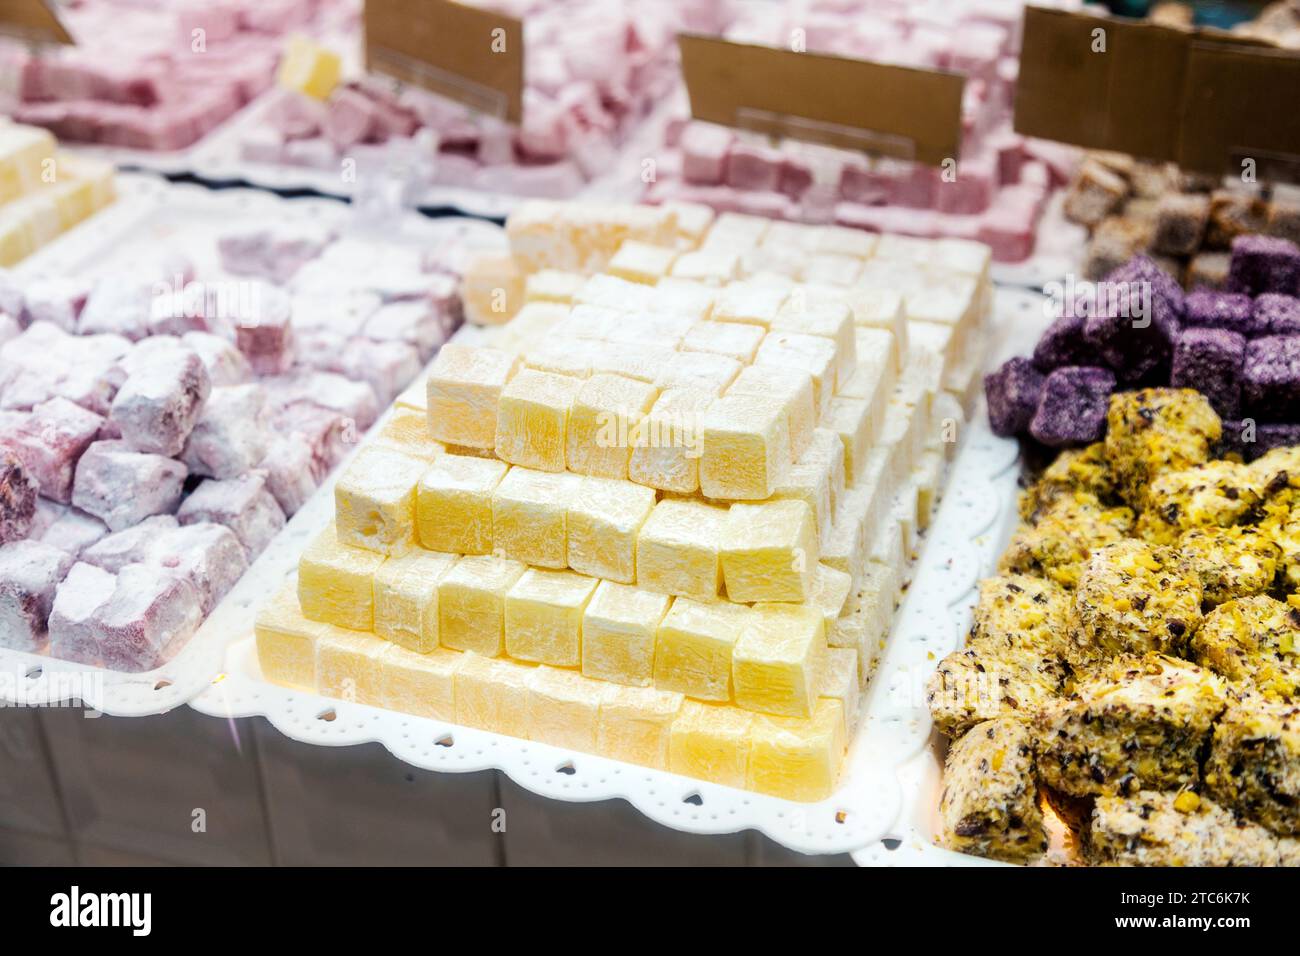 Türkisches Delikatessen und süßes Geschäft in Brick Lane (Rajmahal Sweets), London, England Stockfoto